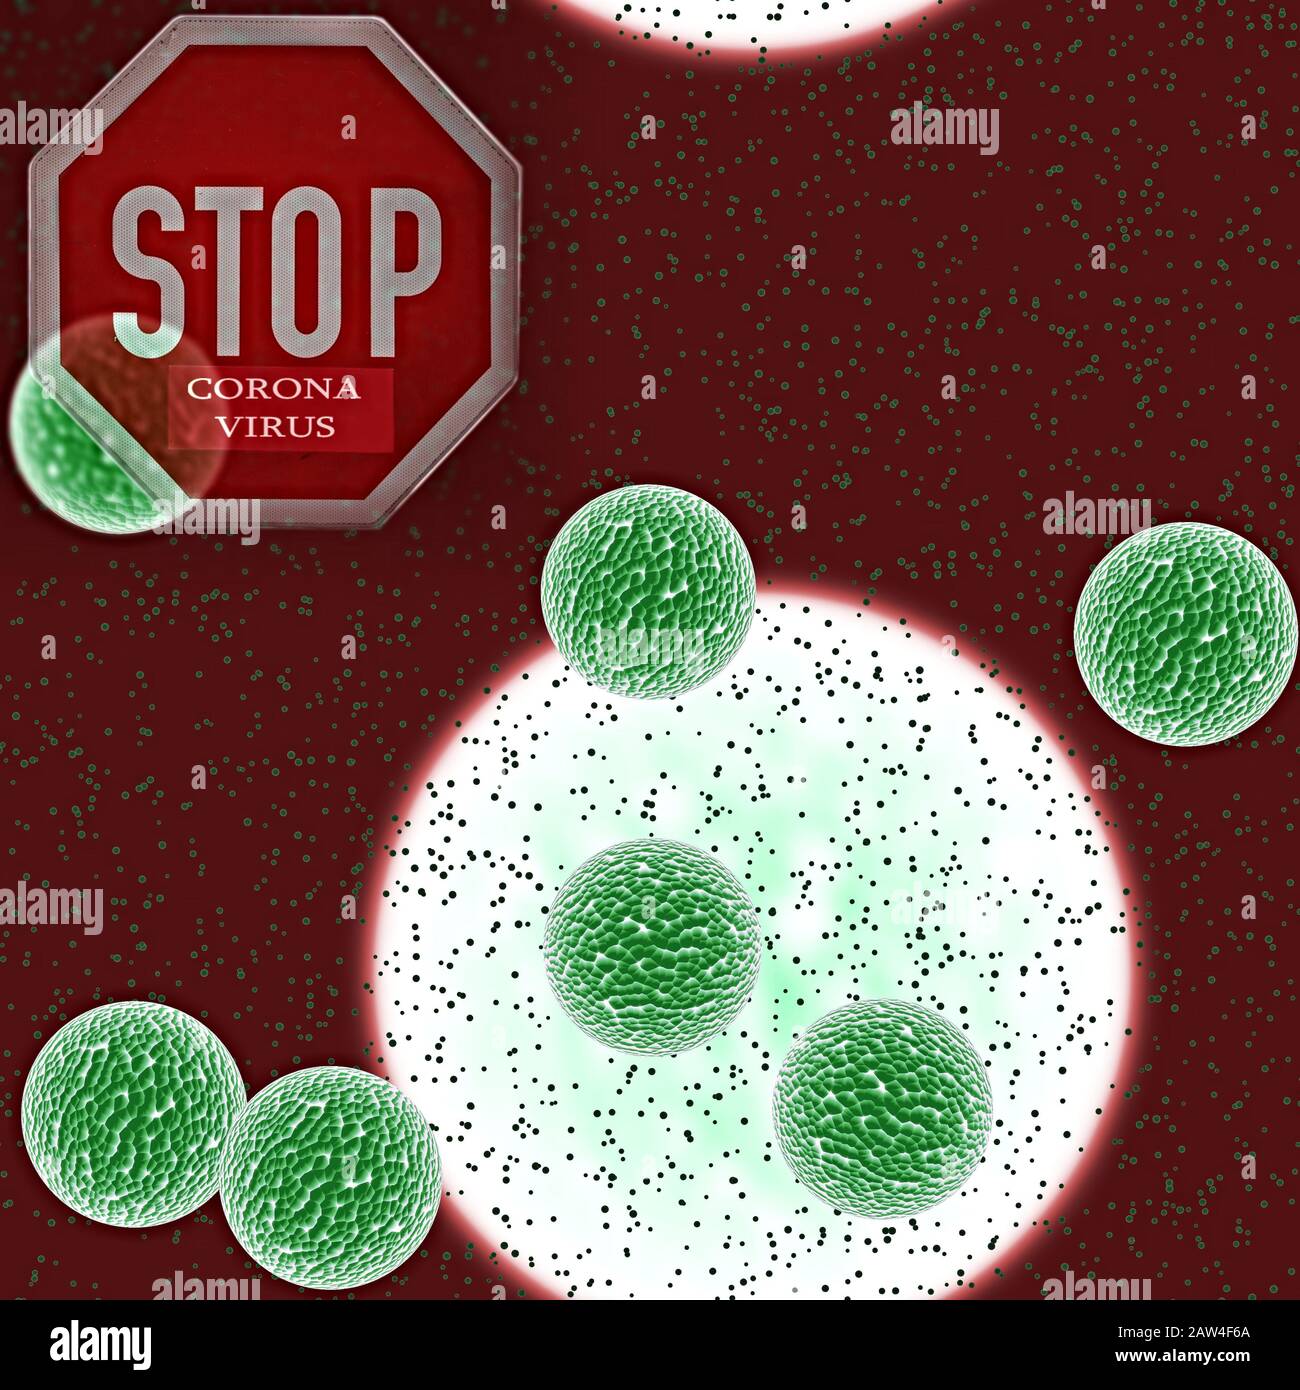 Stop sign with text "Corona Virus " view in microscope. Novel coronavirus 2019-nCoV, MERS-Cov. Illustration Stock Photo